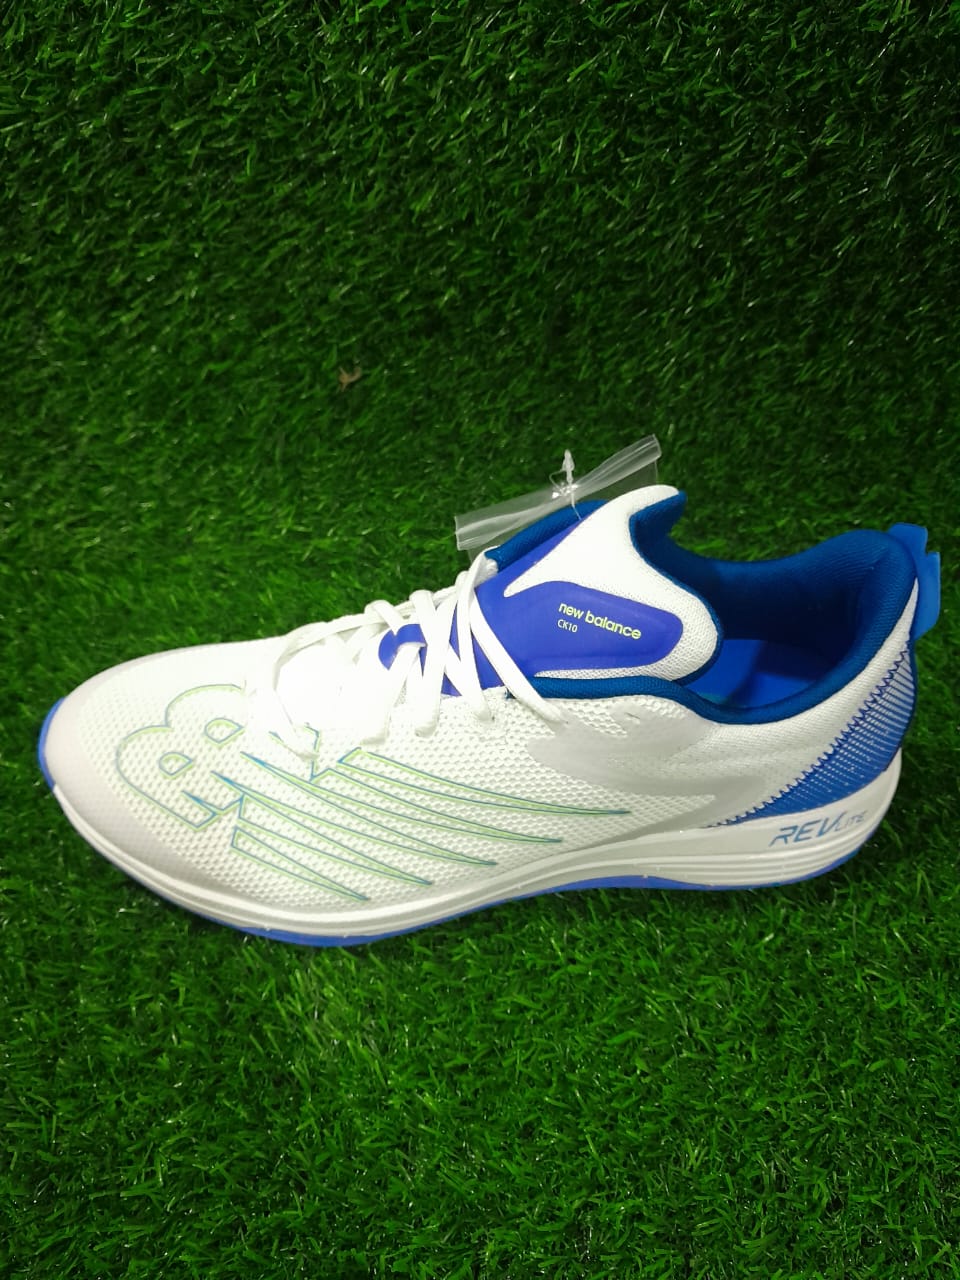 New Balance CK10 R5 Spike Cricket Shoes White Blue